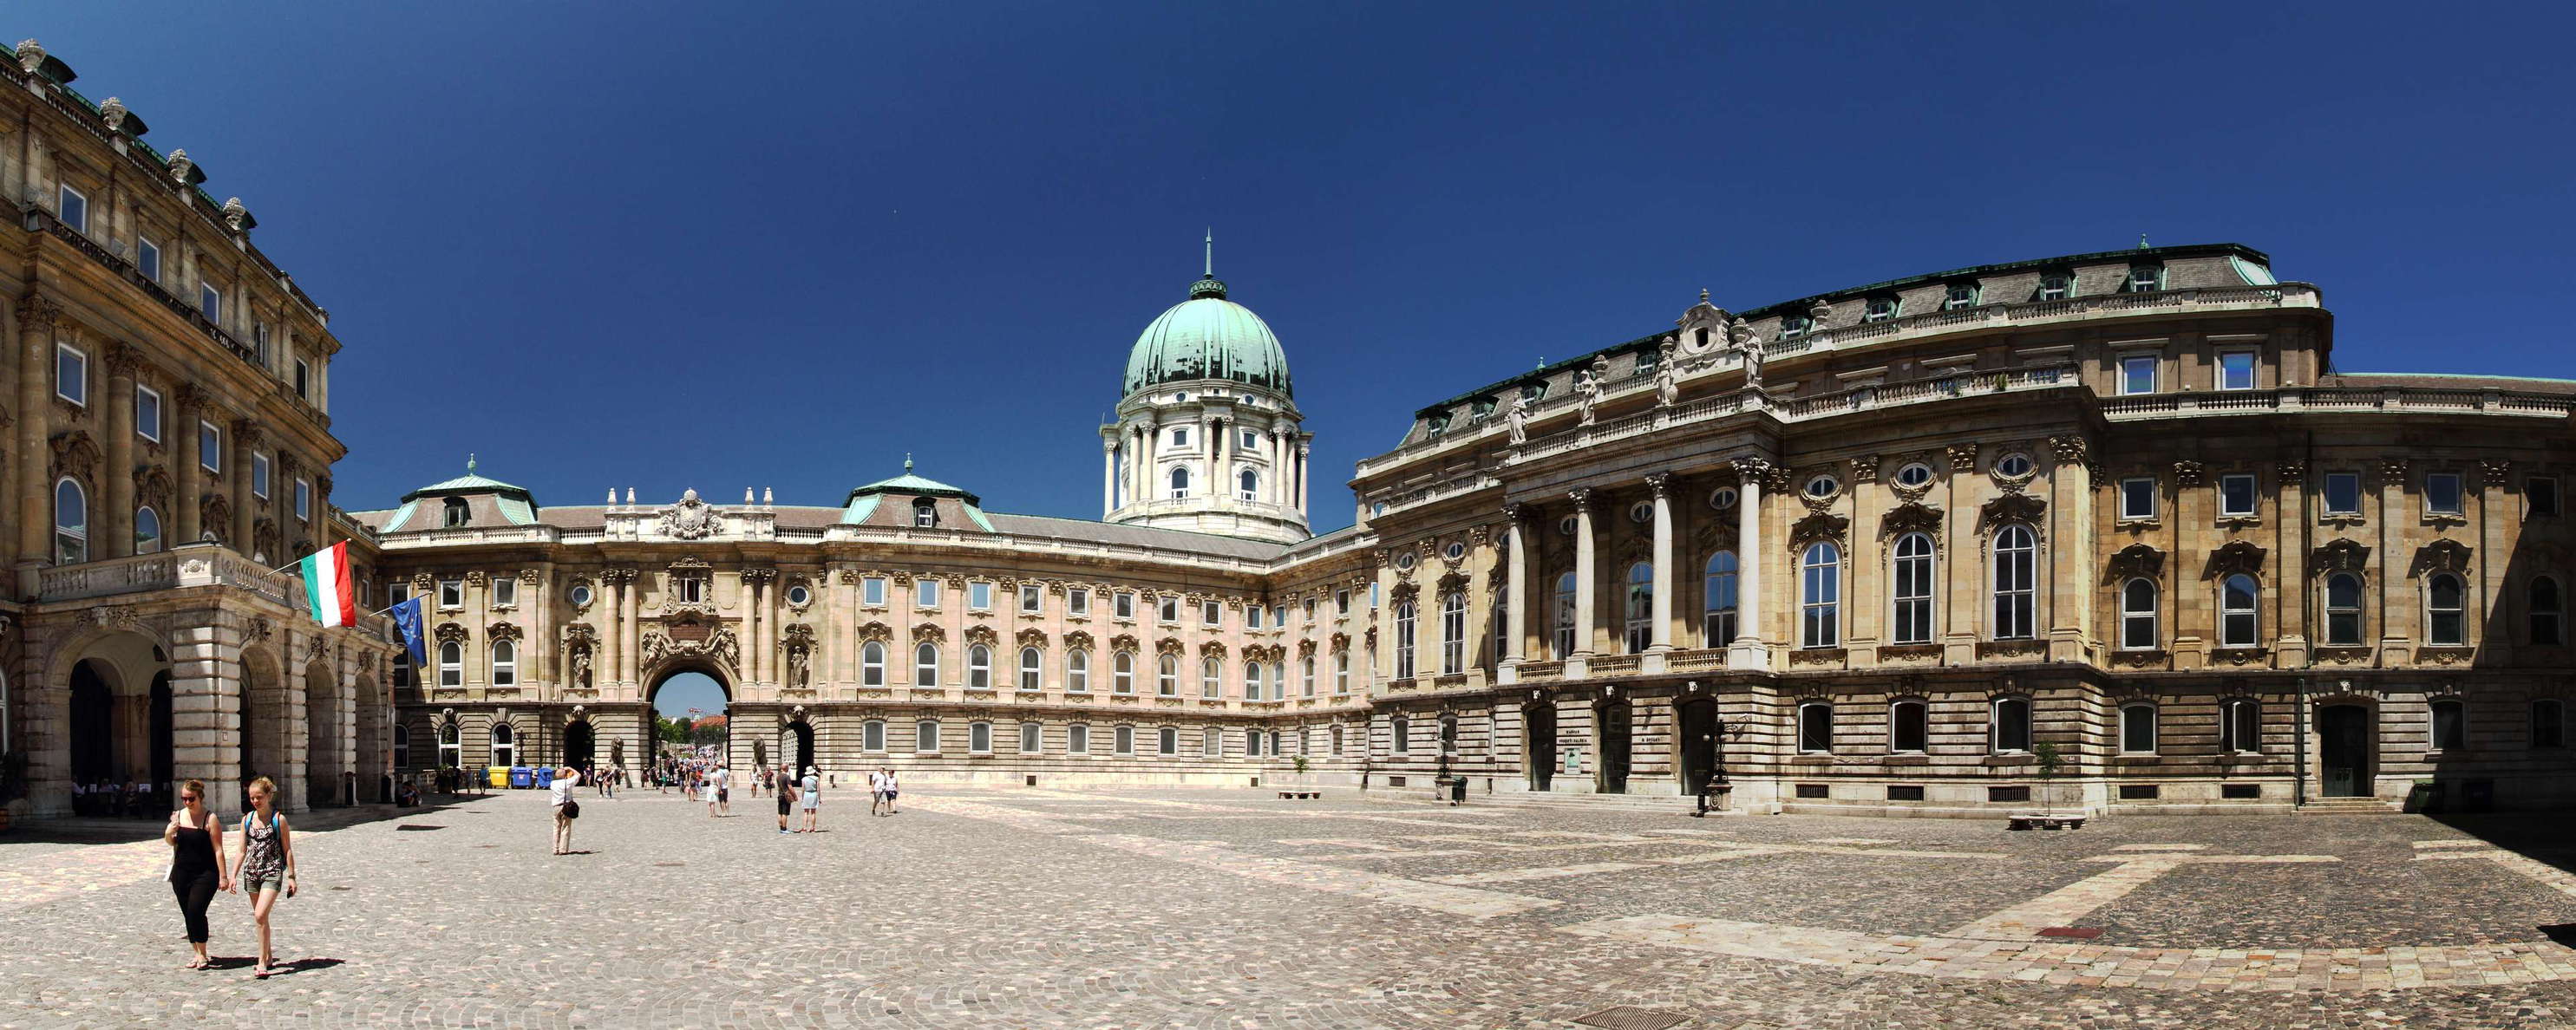 Budapest | Budavári palota